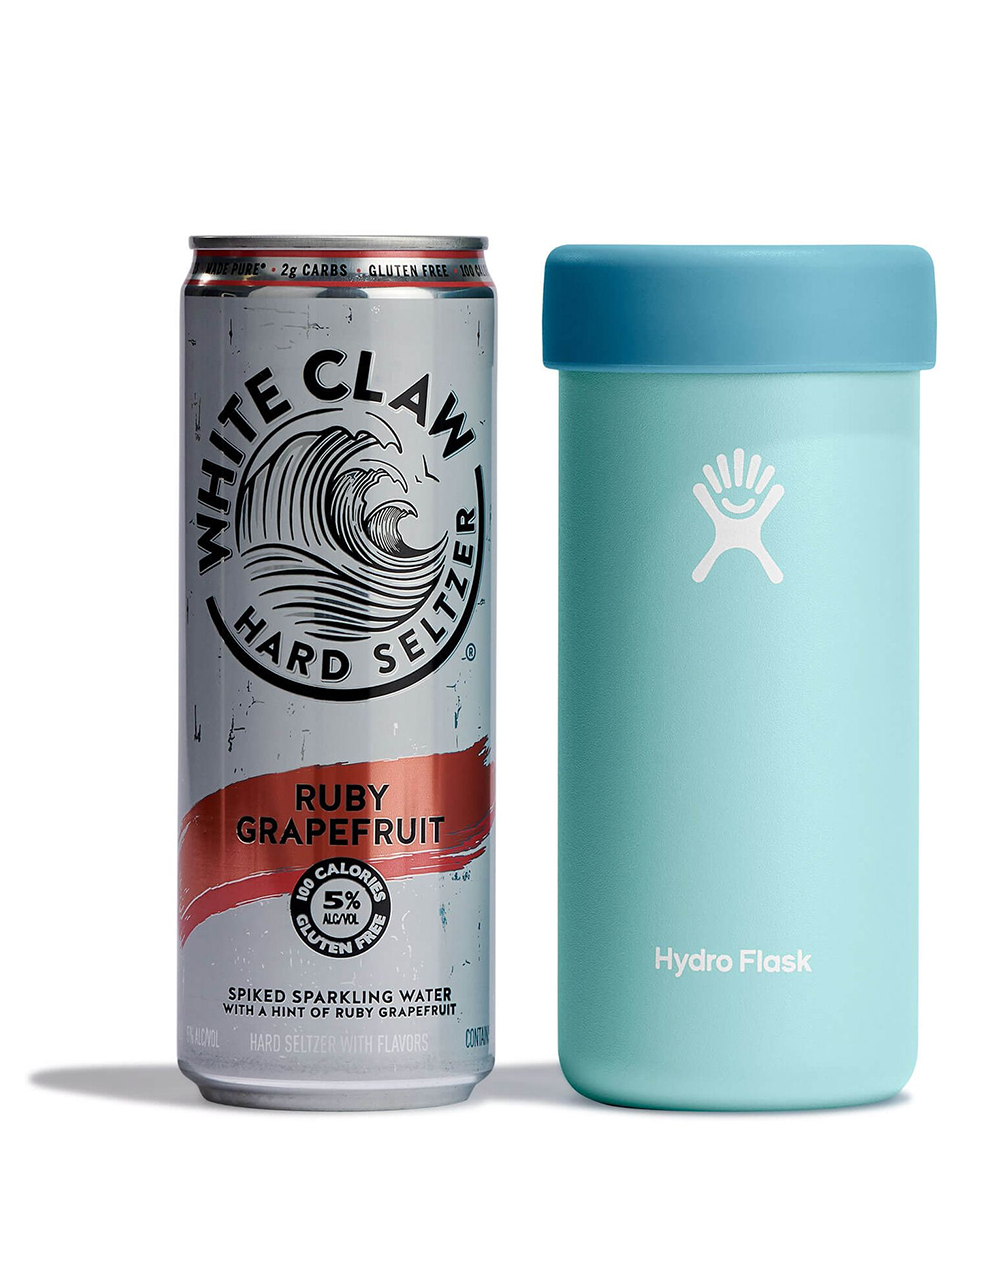 Hydro Flask 12 oz. Slim Cooler Cup - Worldwide Golf Shops